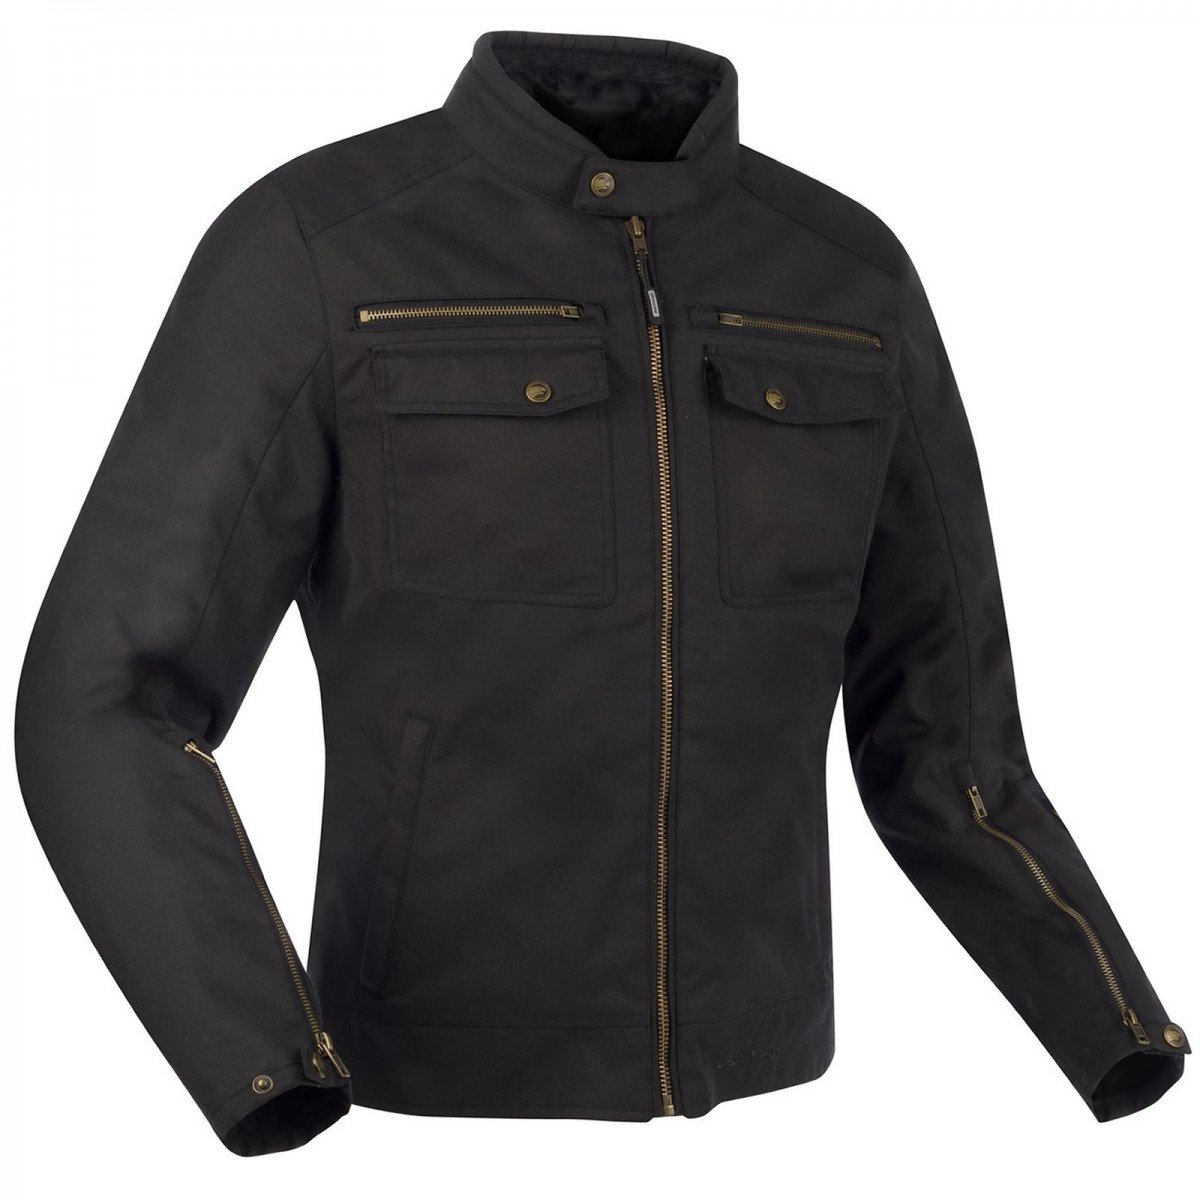 Image of Bering Winton Jacket Black Size 4XL ID 3660815161913